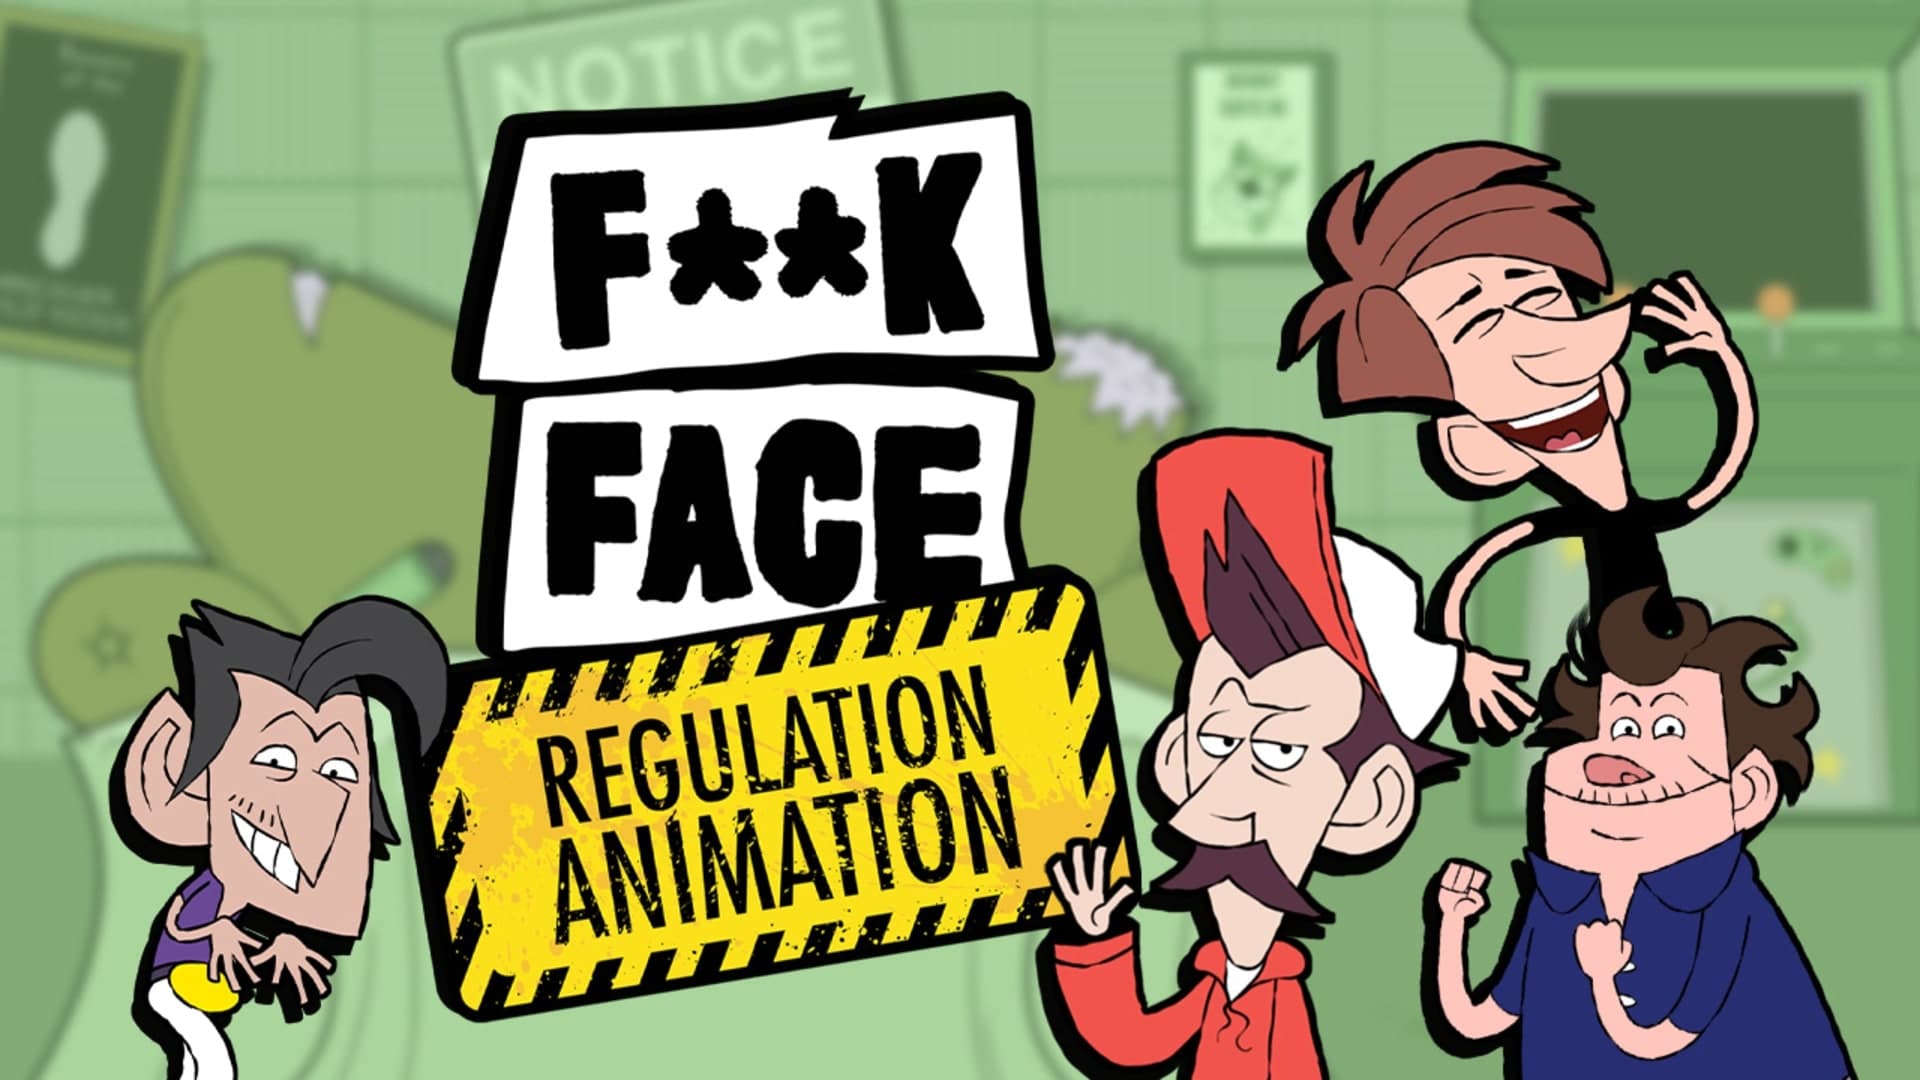 F**KFACE Regulation Animation